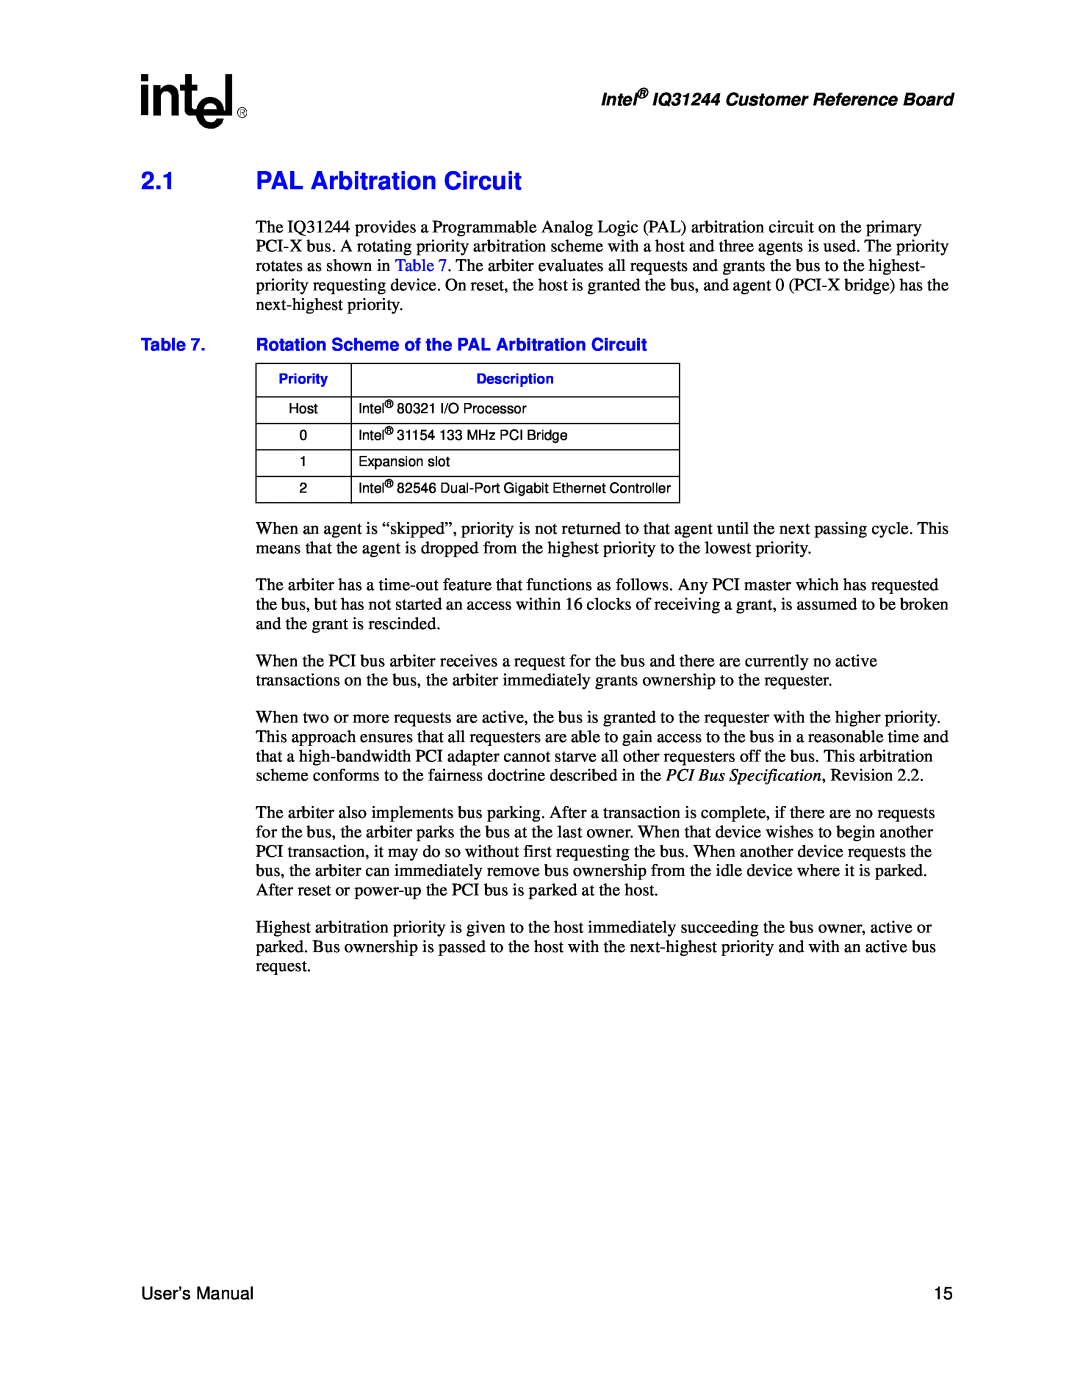 Intel user manual 2.1PAL Arbitration Circuit, Intel IQ31244 Customer Reference Board, Priority, Description 